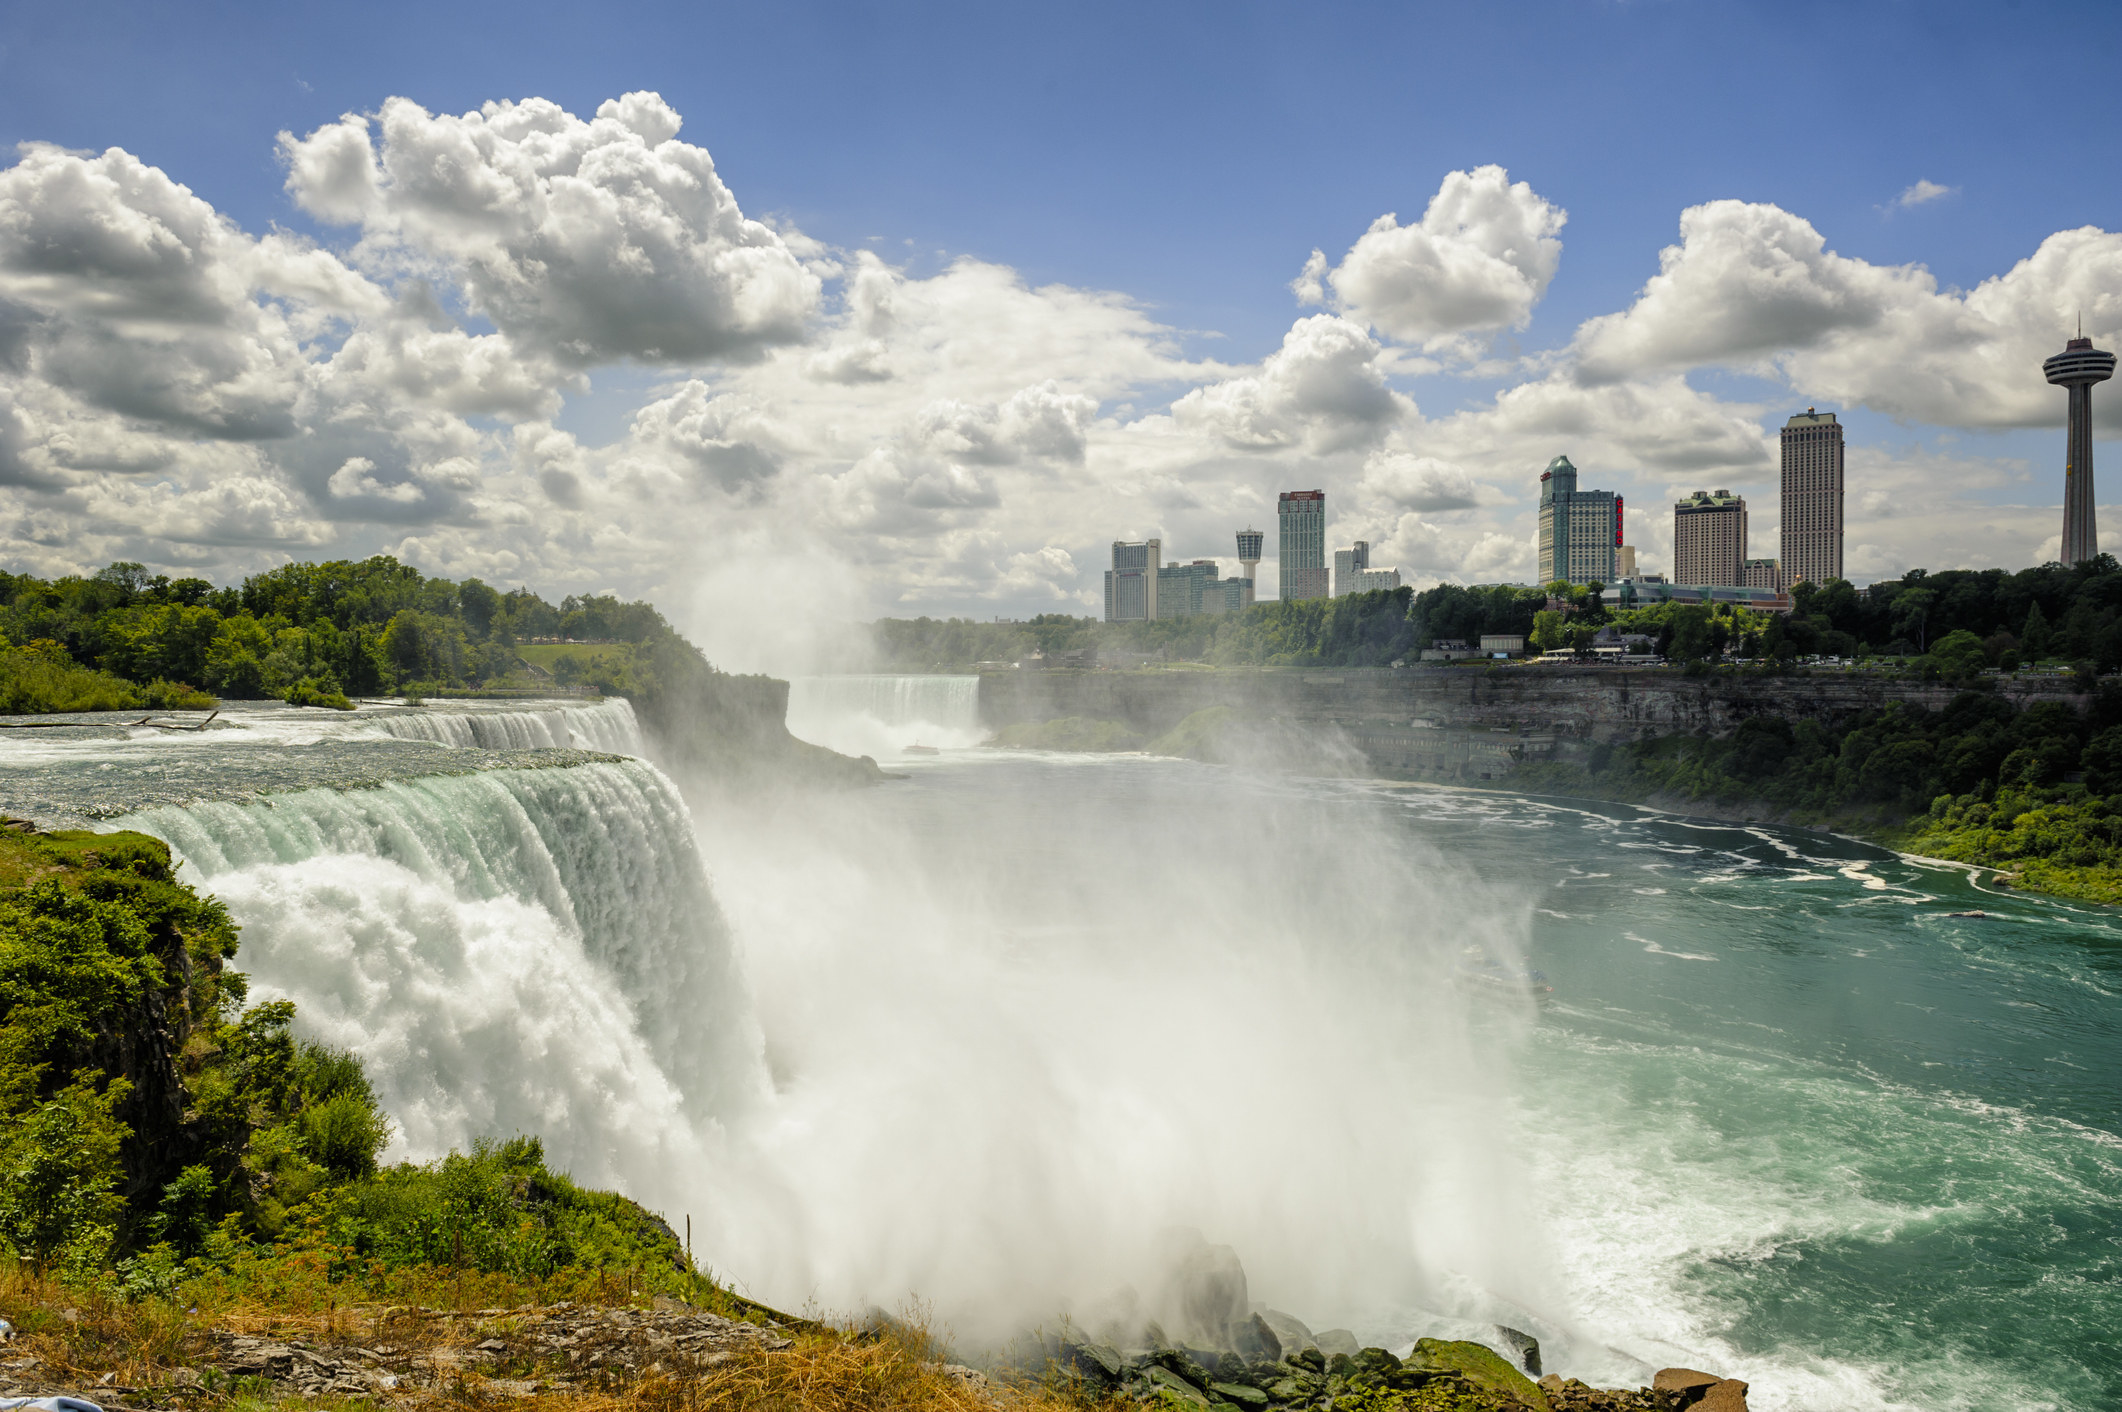 American Niagara Falls with the Niagara falls city in background.